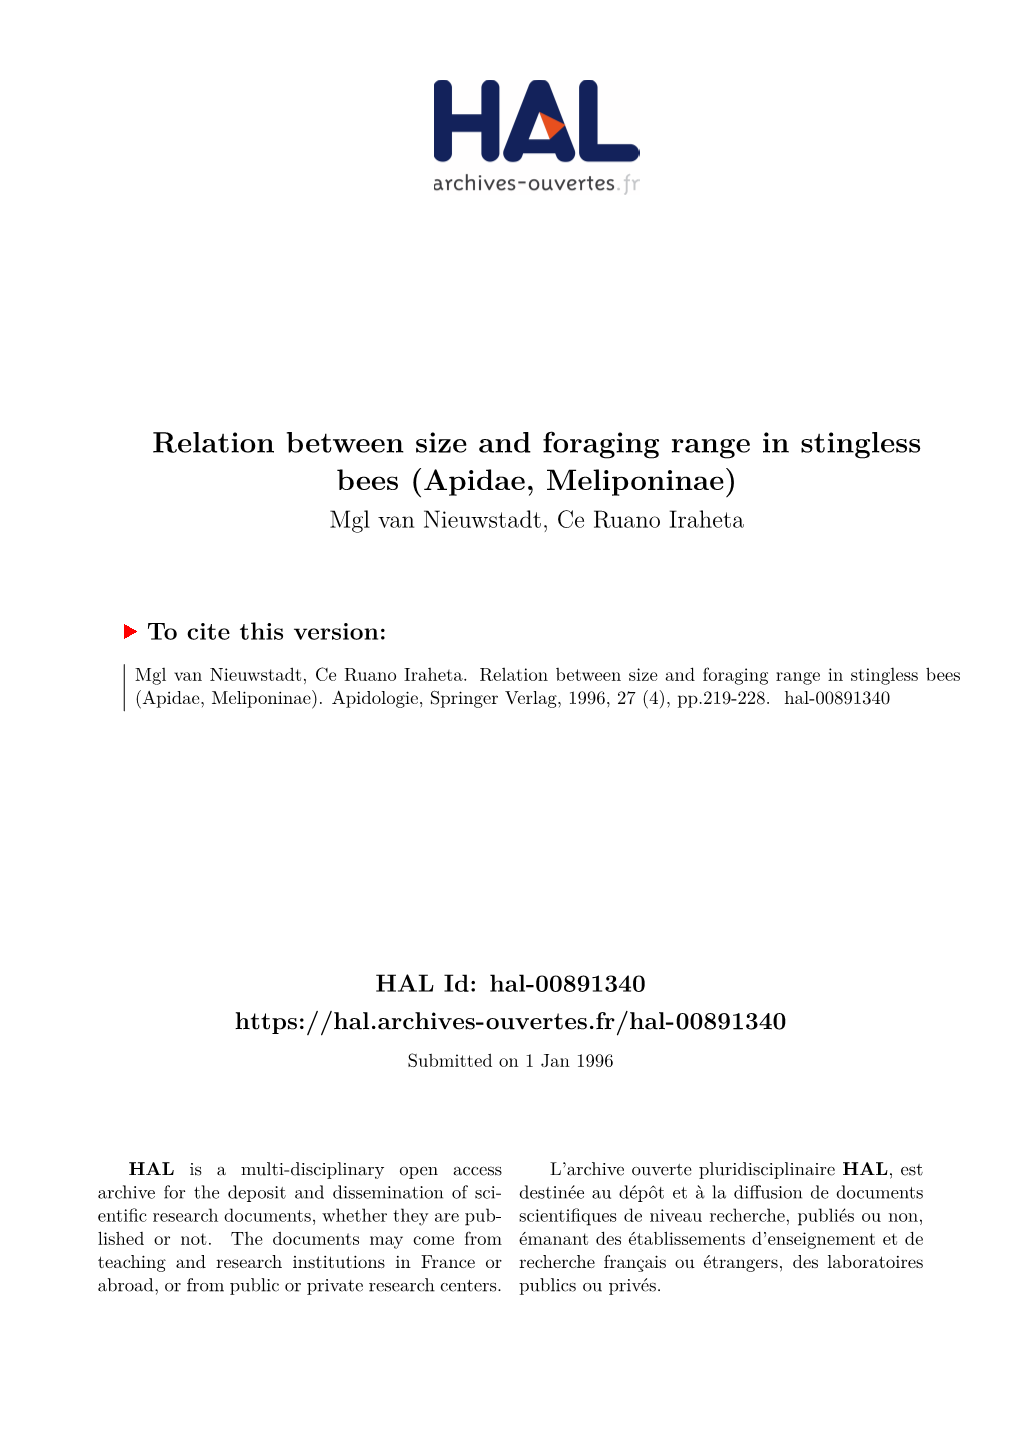 Relation Between Size and Foraging Range in Stingless Bees (Apidae, Meliponinae) Mgl Van Nieuwstadt, Ce Ruano Iraheta